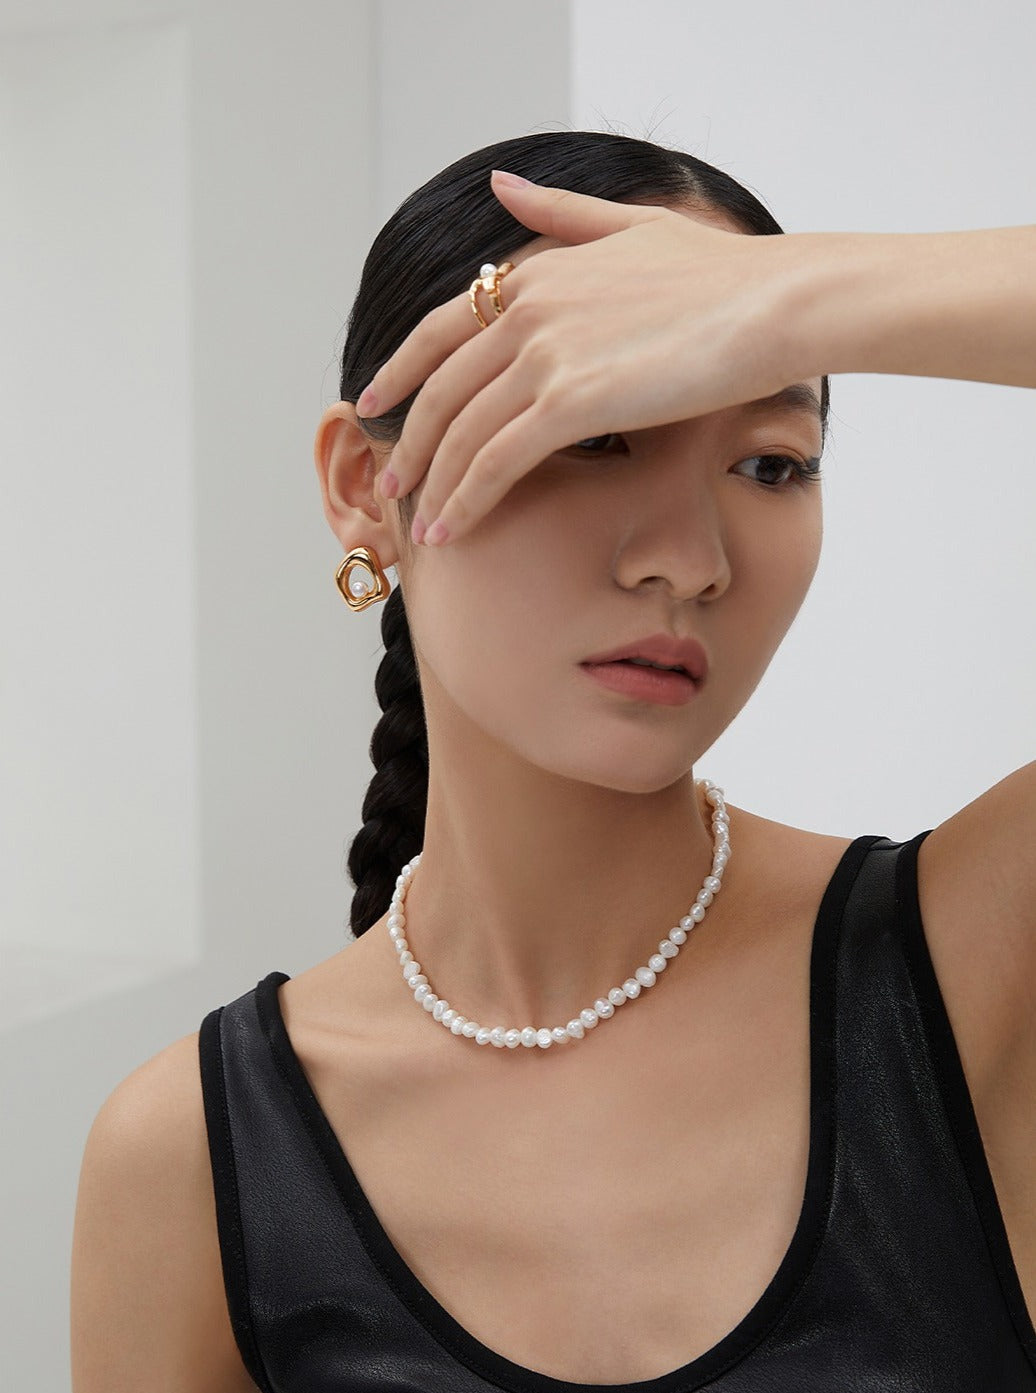 Asymmetrical Sterling Silver Pearl Earrings | earrings | 925earrings, _badge_S925, earrings, natural pearl, Necklace, Pearl, Pearl Earrings, s925, simsmore | SHOPQAQ